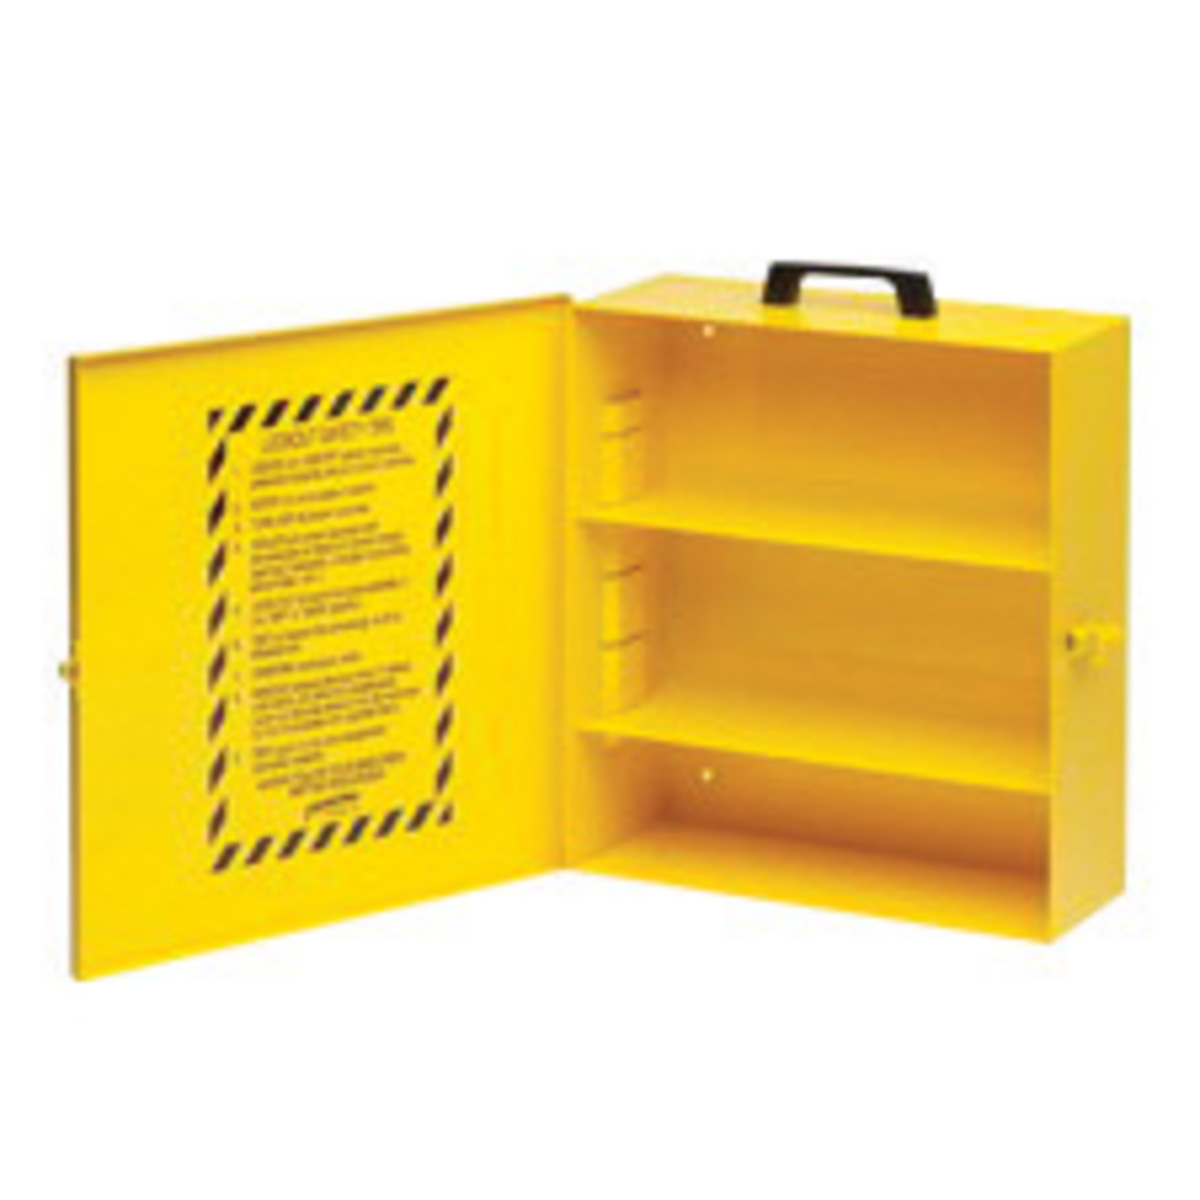 Brady® Yellow Metal Prinzing® Lockout Cabinet